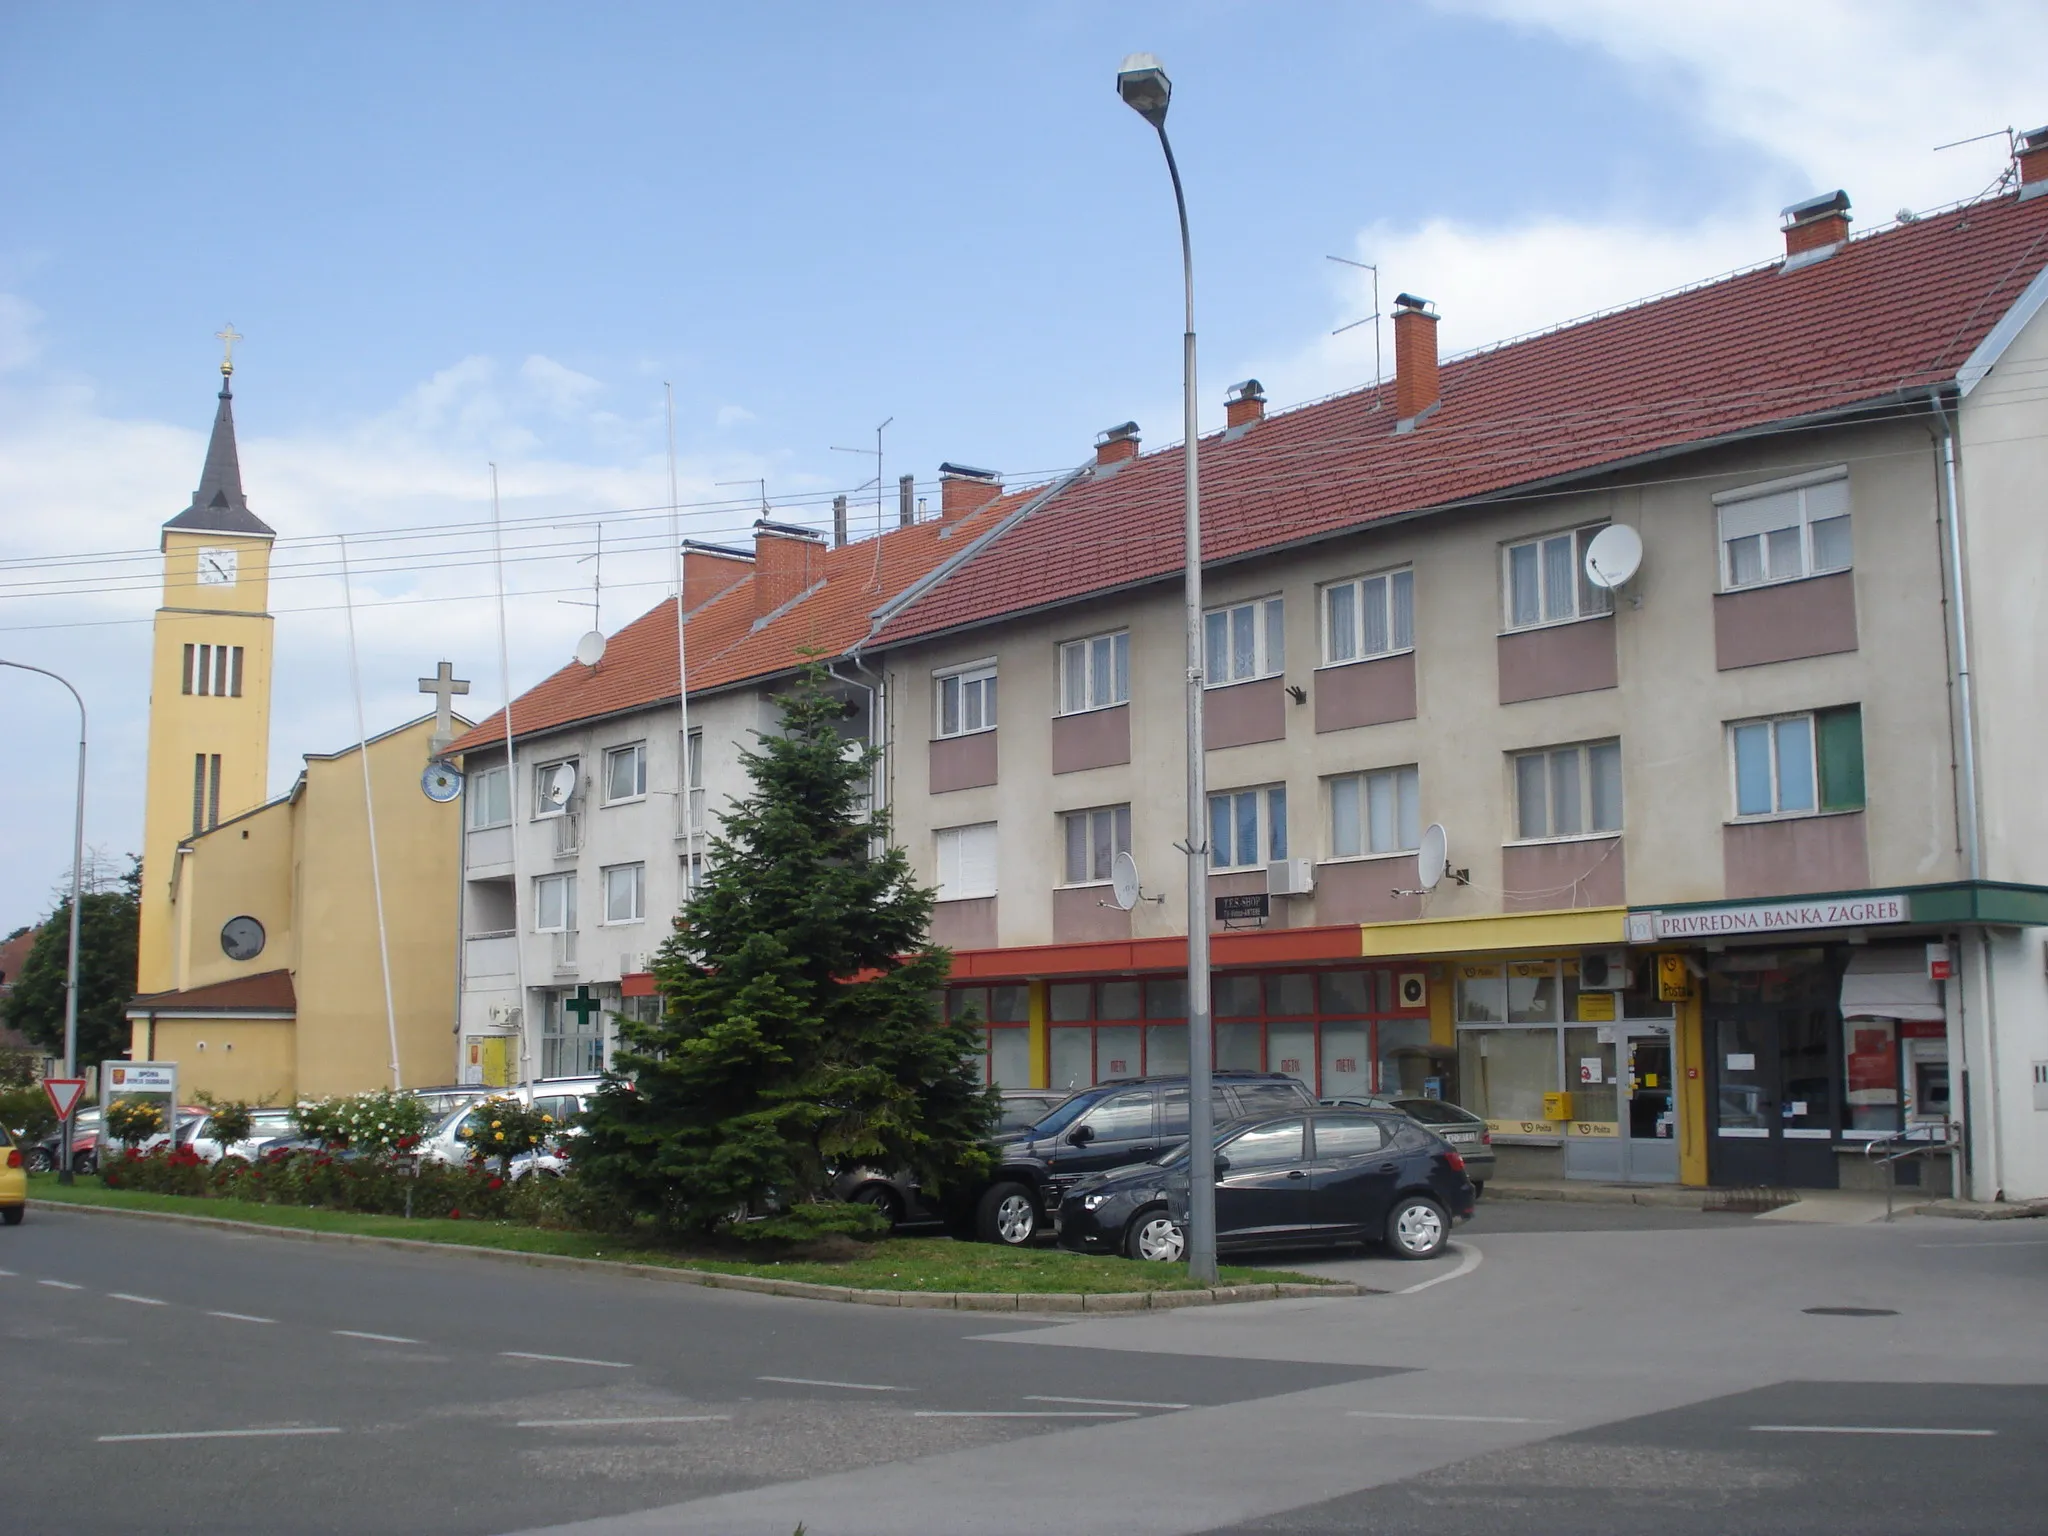 Photo showing: Donja Dubrava, Medjimurje County, Croatia - buildings in the village centre